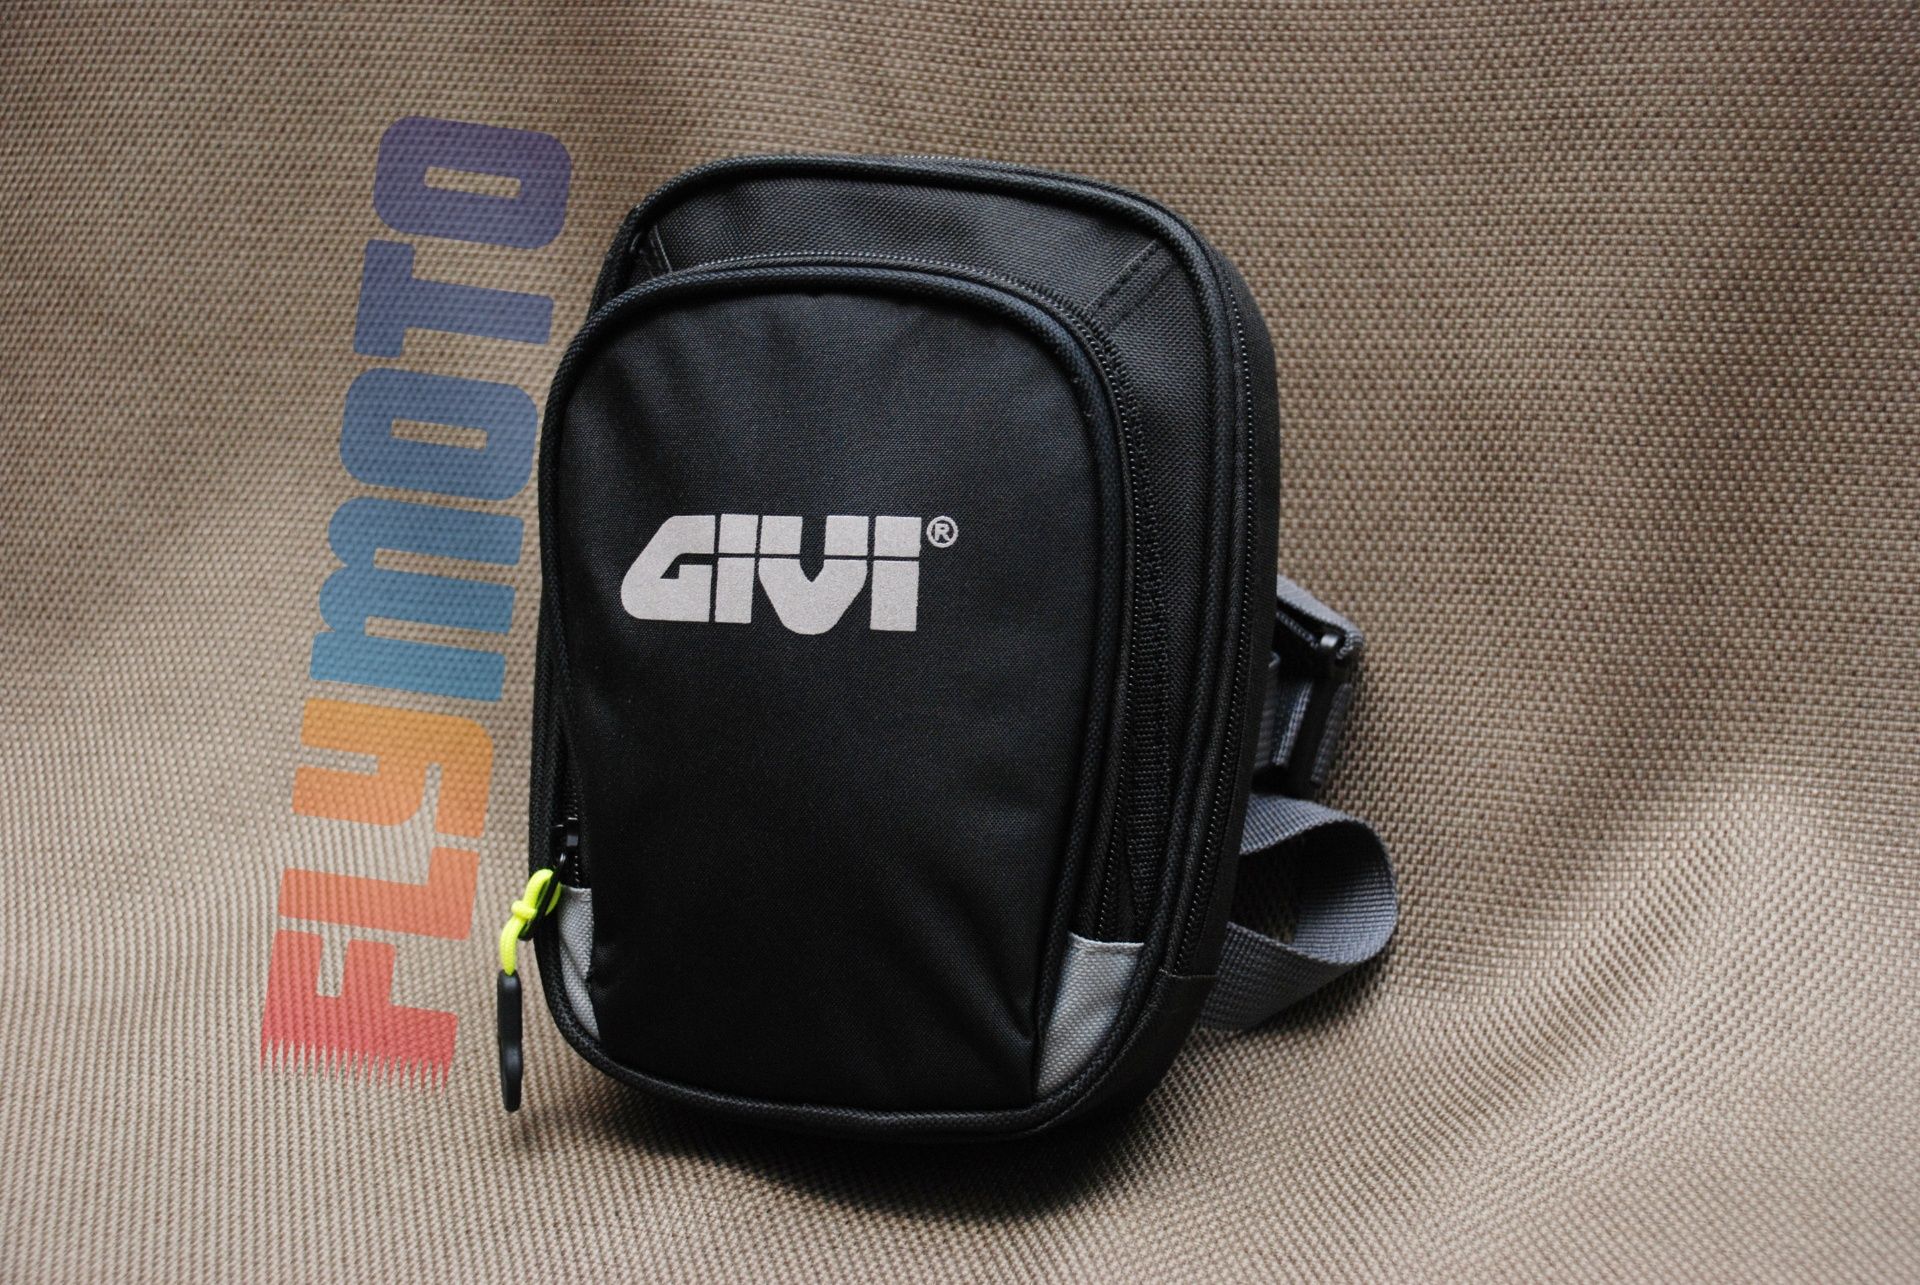 Сумка набедренная GIVI, мото сумка на стегно, сумка для мотоцикла